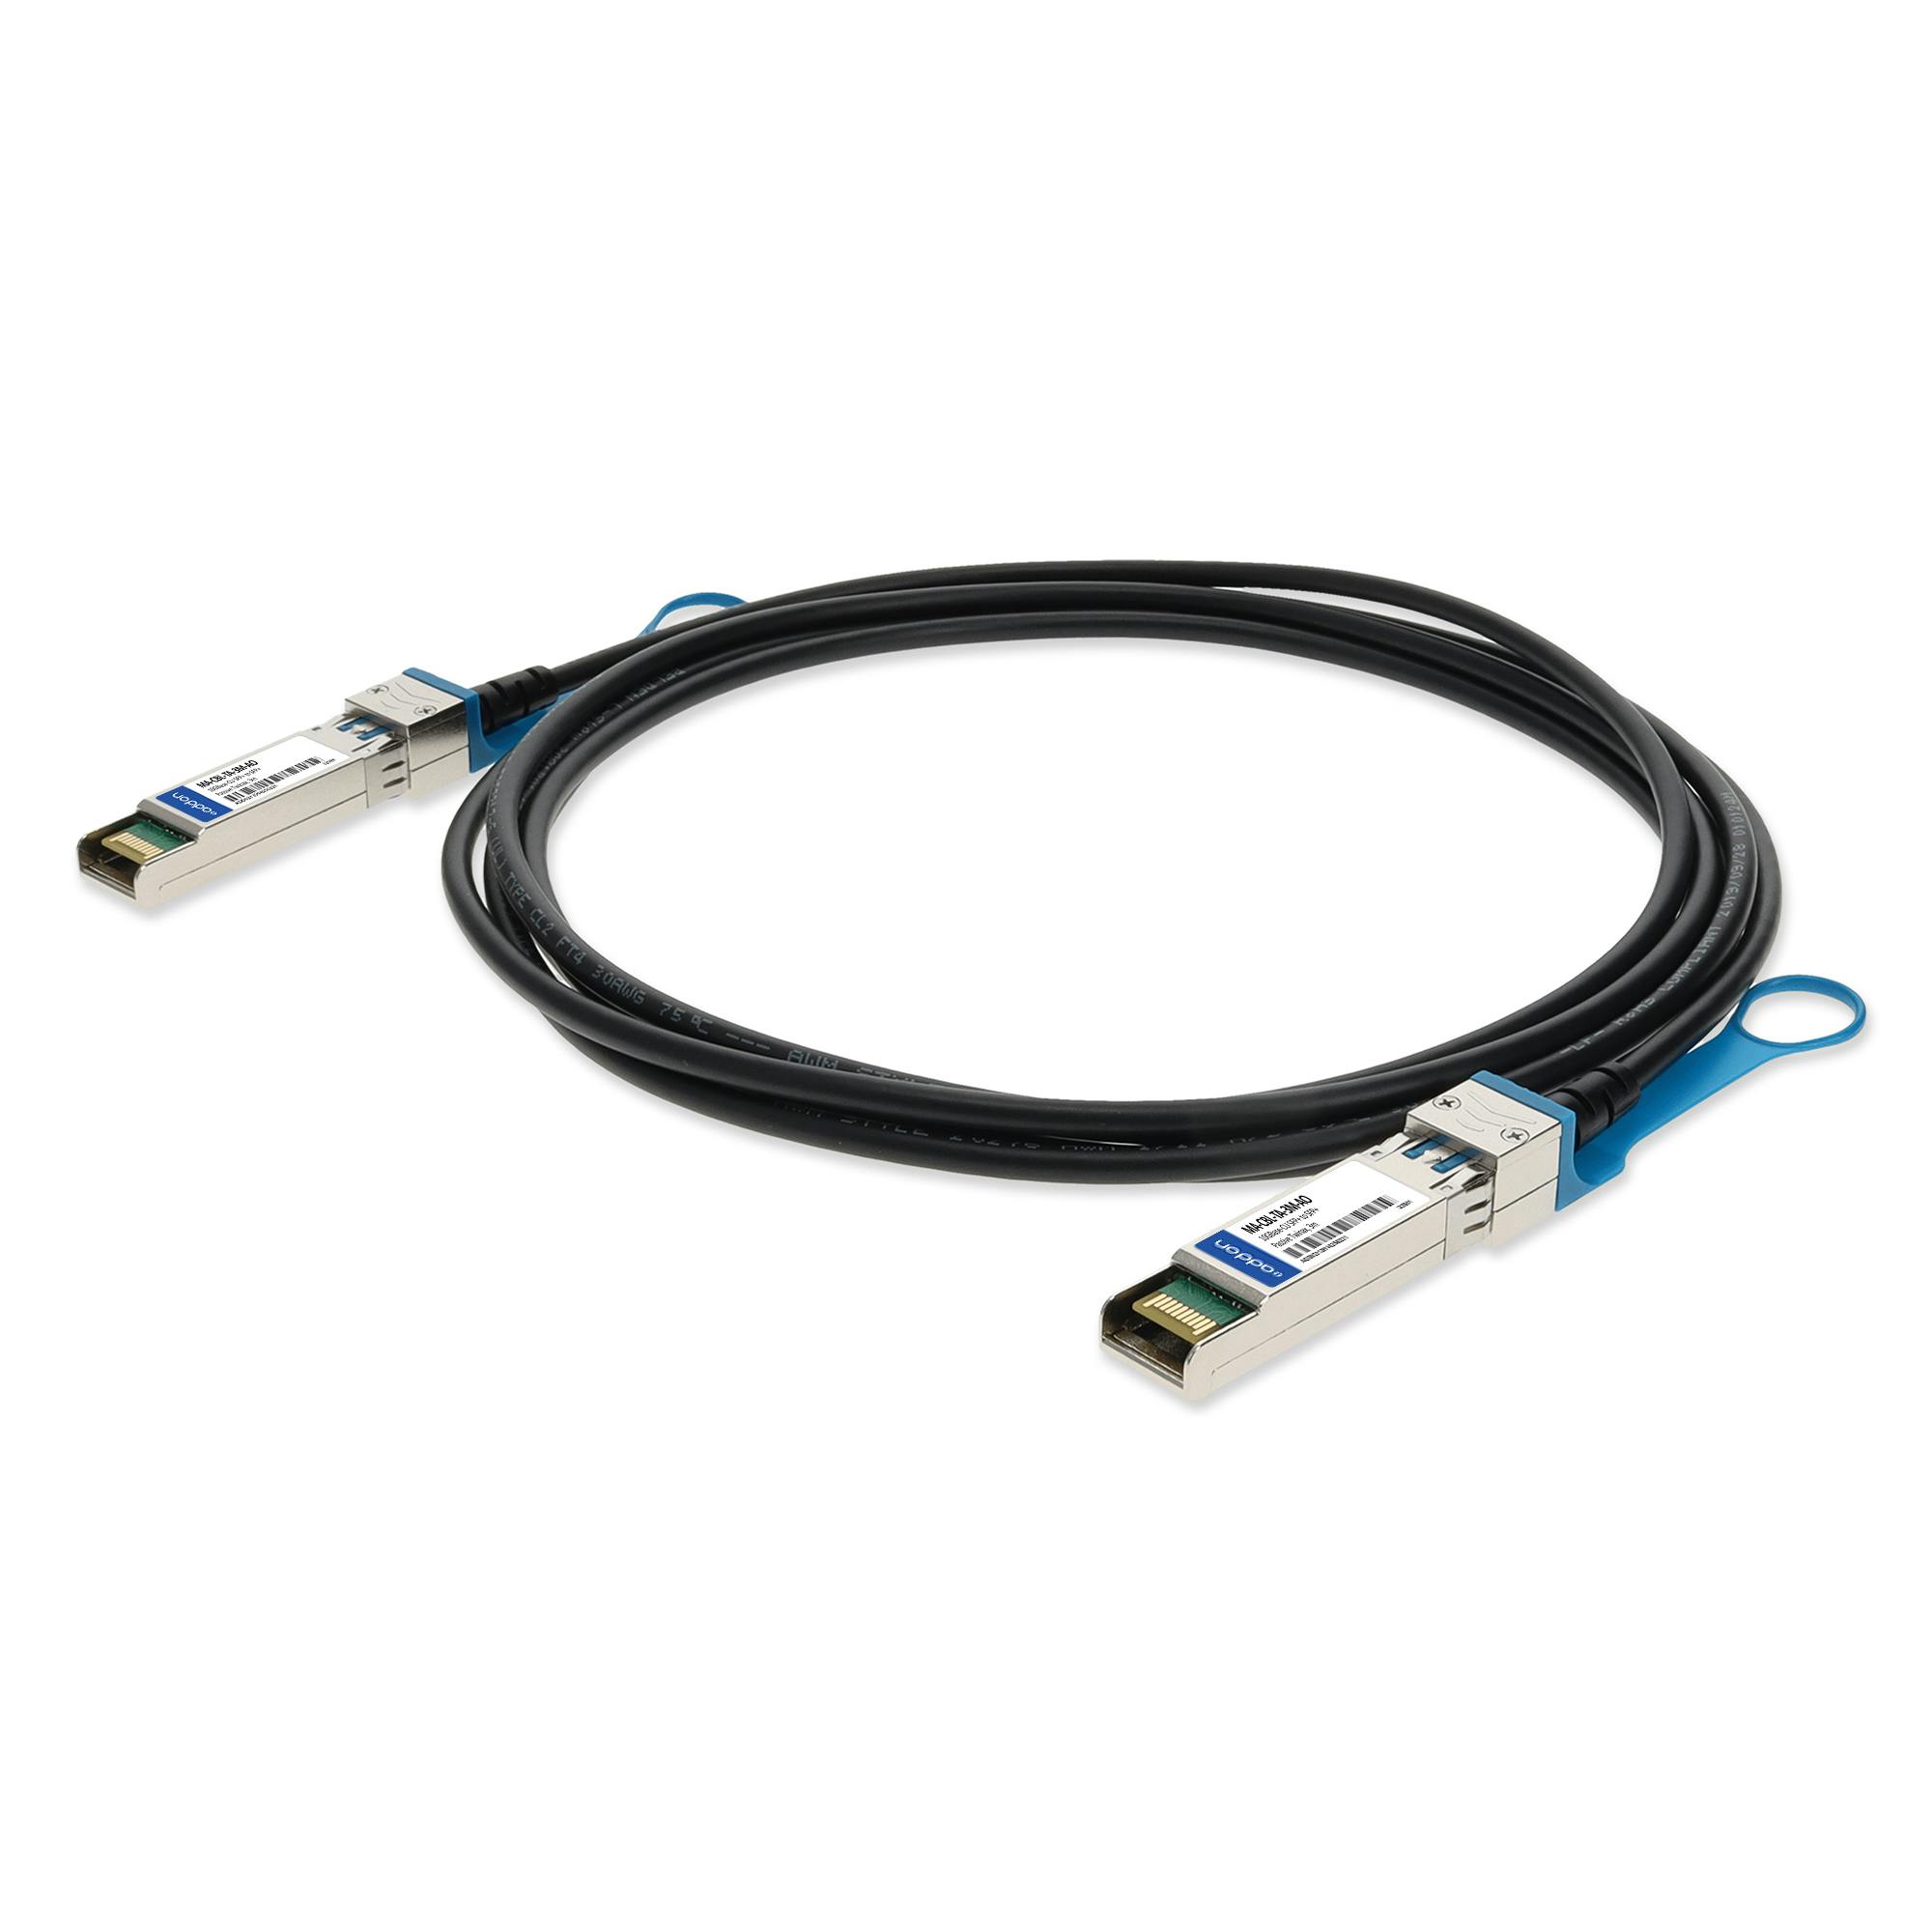 MA-CBL-TA-3M-AO Addon-Networking Twinaxial Cable 